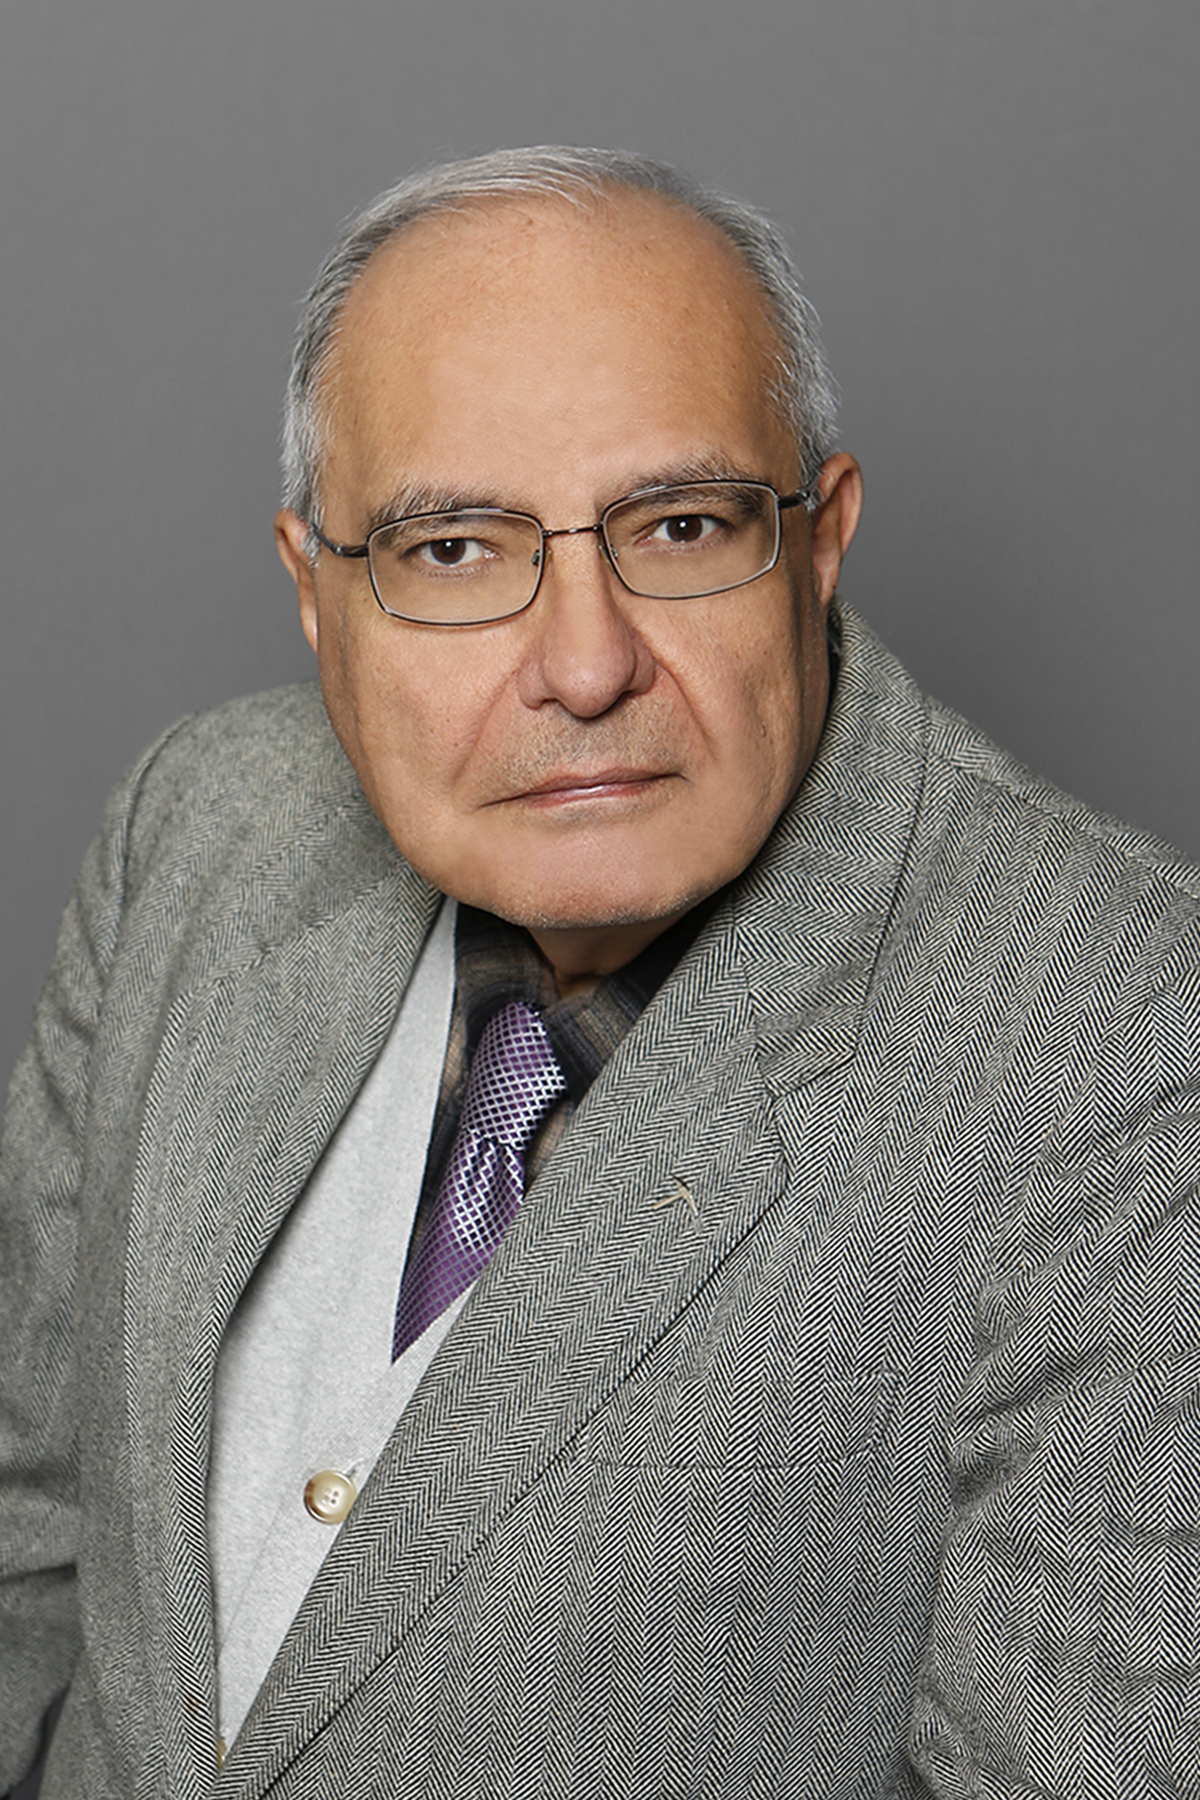 Prof. Behzad Djafari Rouhani